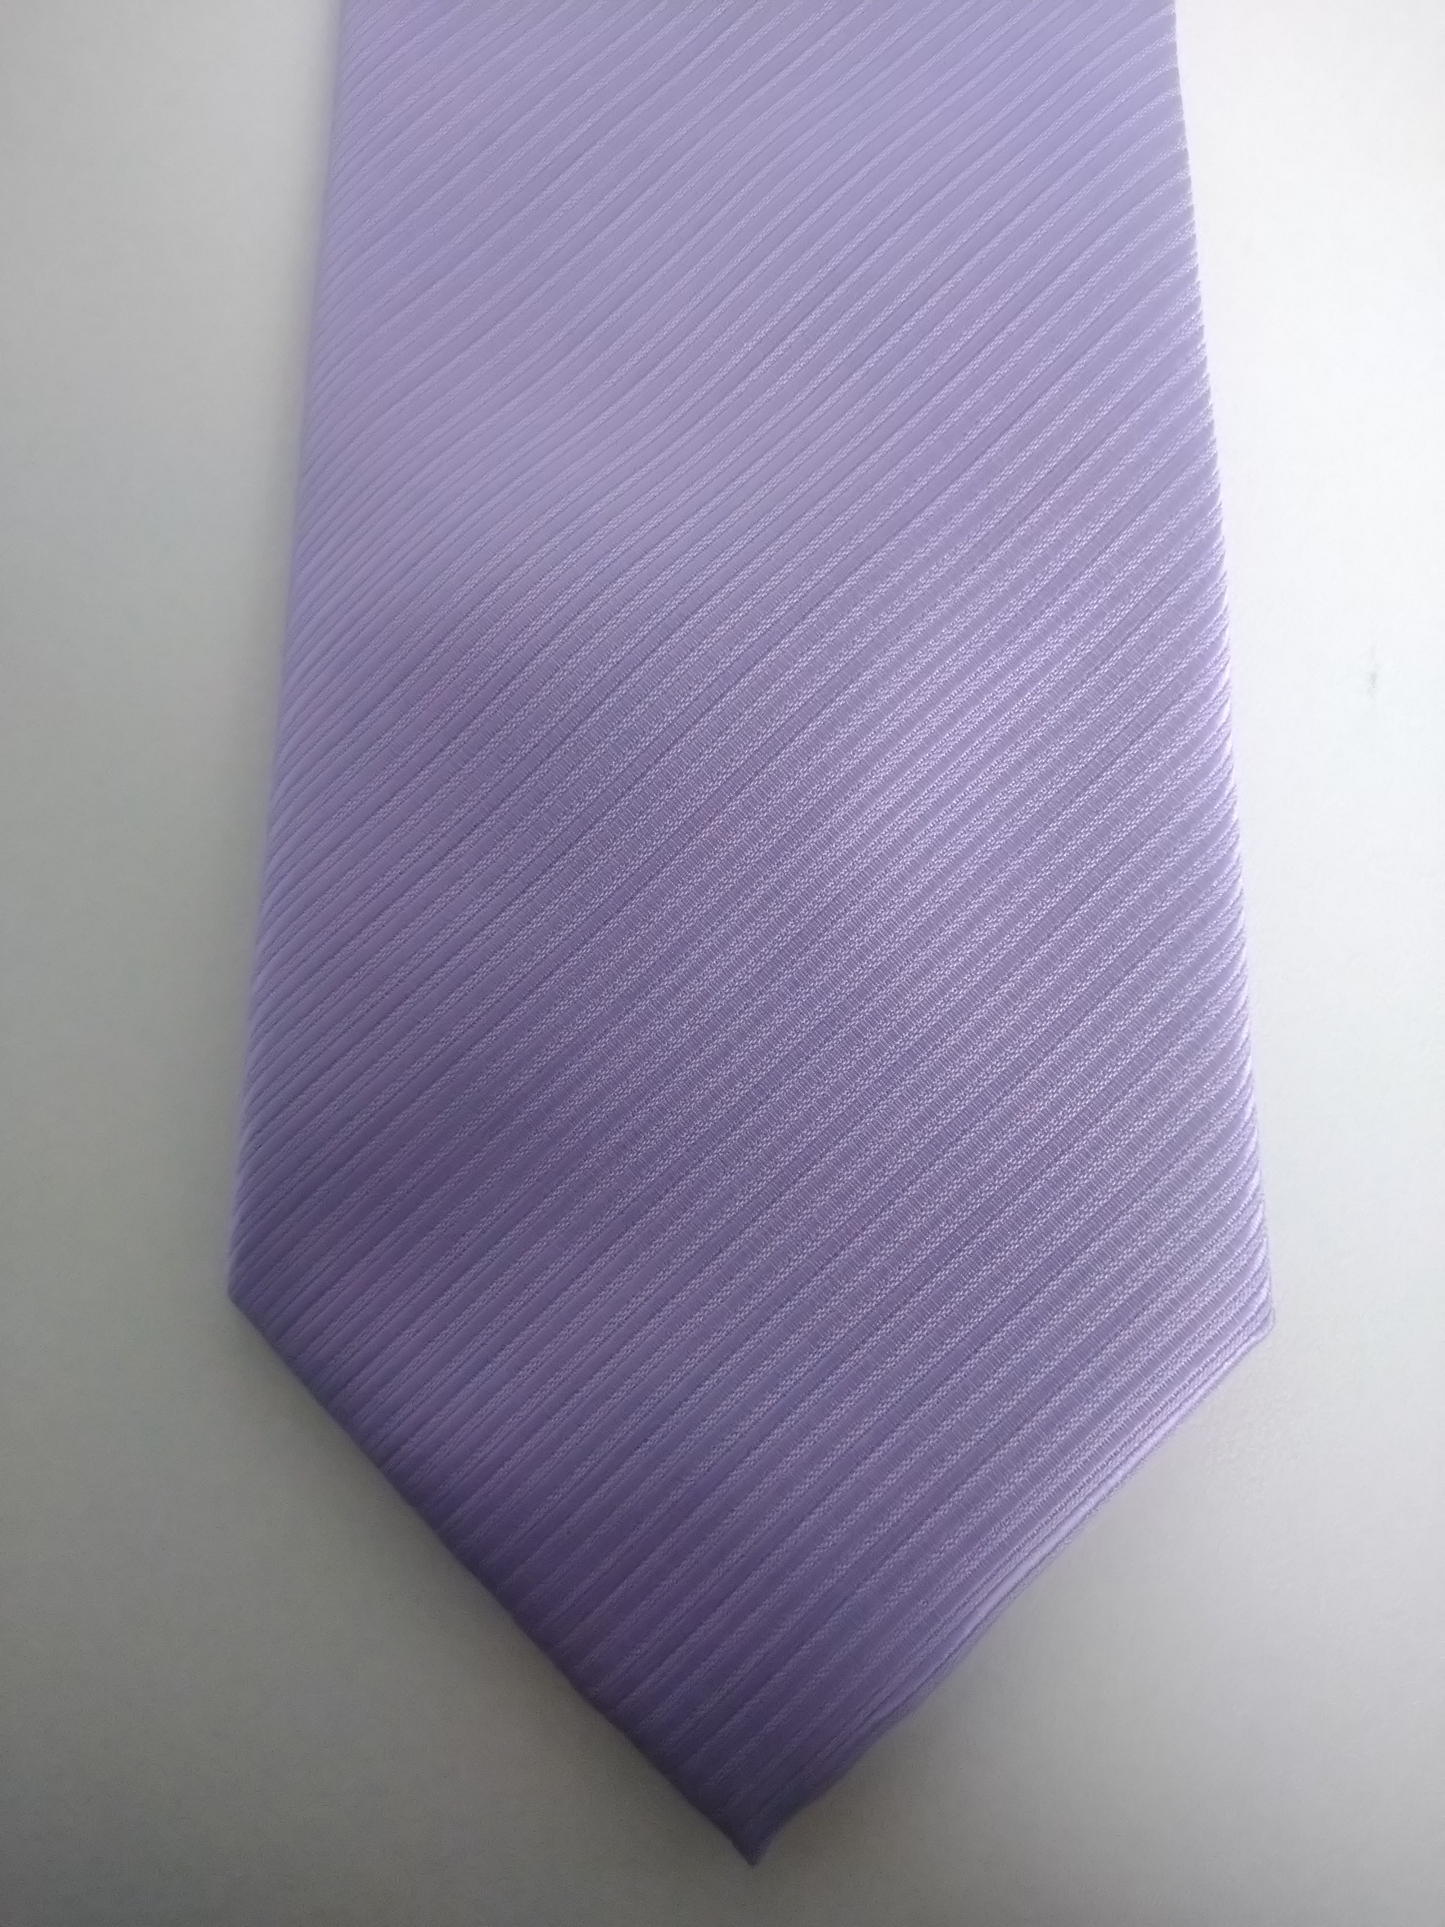 Vintage Canda Krawatte. Lila gestreift. Polyester.